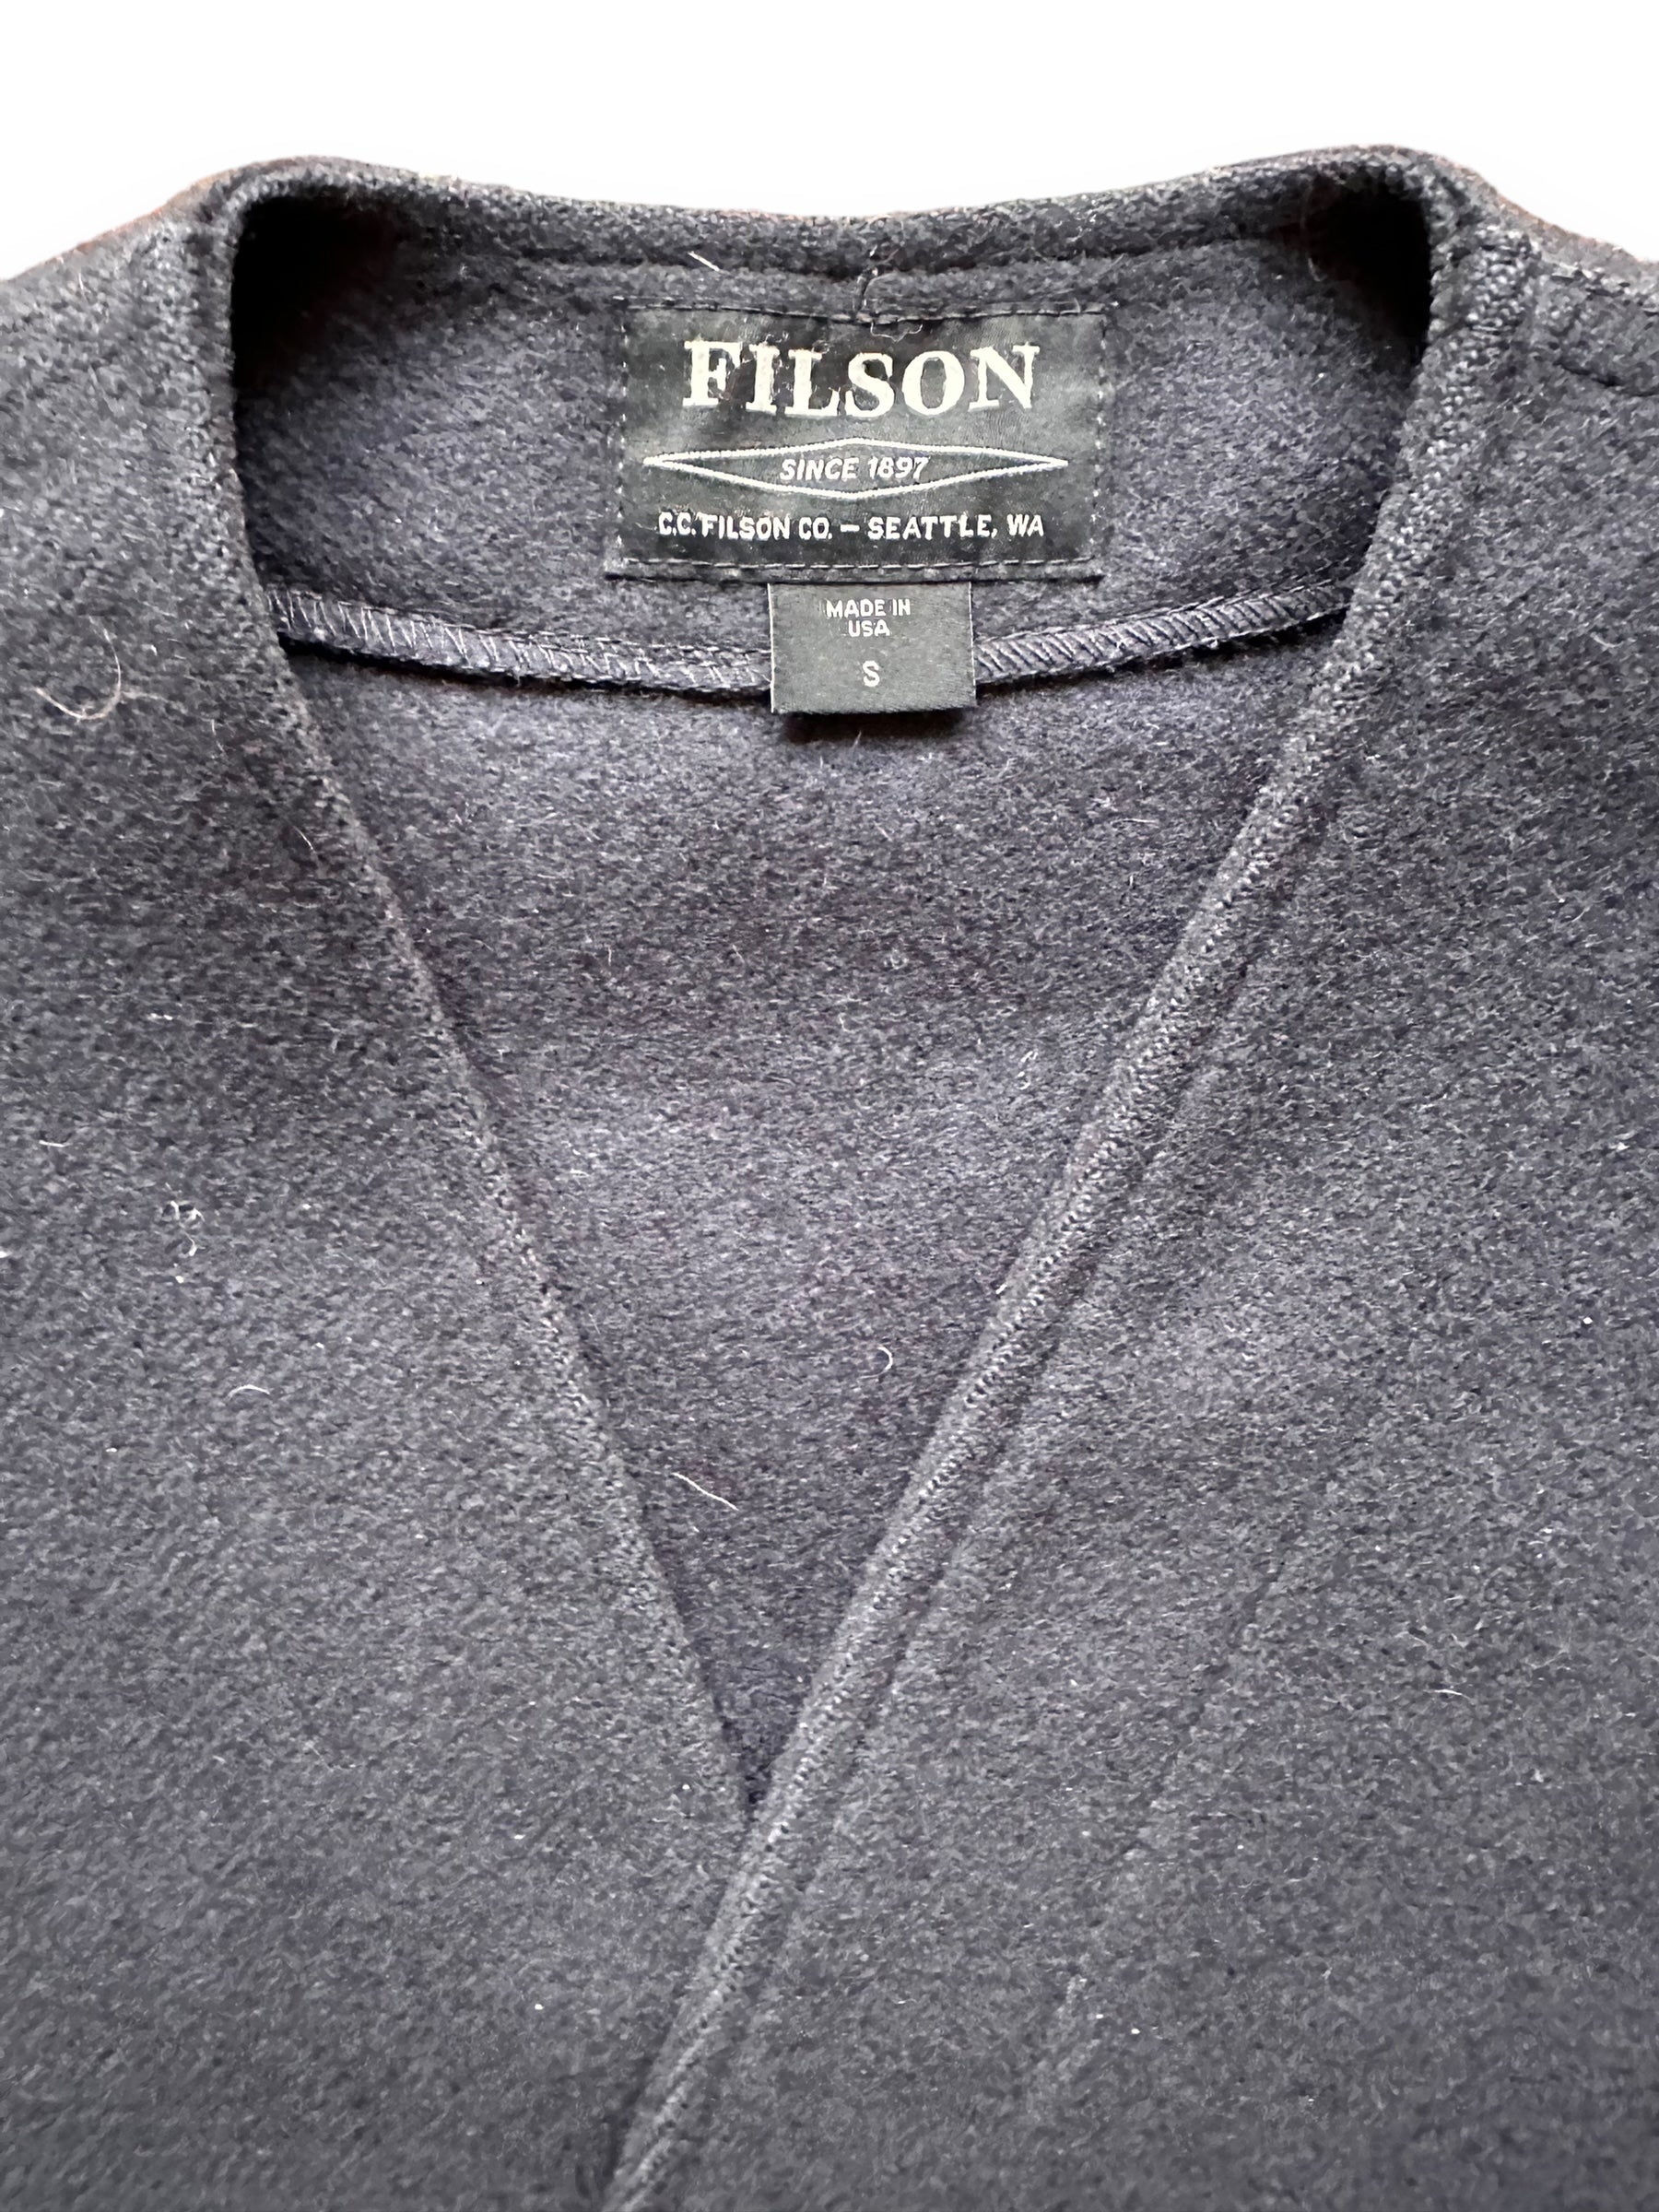 Tag View of Black Label Filson Mackinaw Wool Vest SZ S |  Barn Owl Vintage Goods | Filson Bargain Outlet Seattle